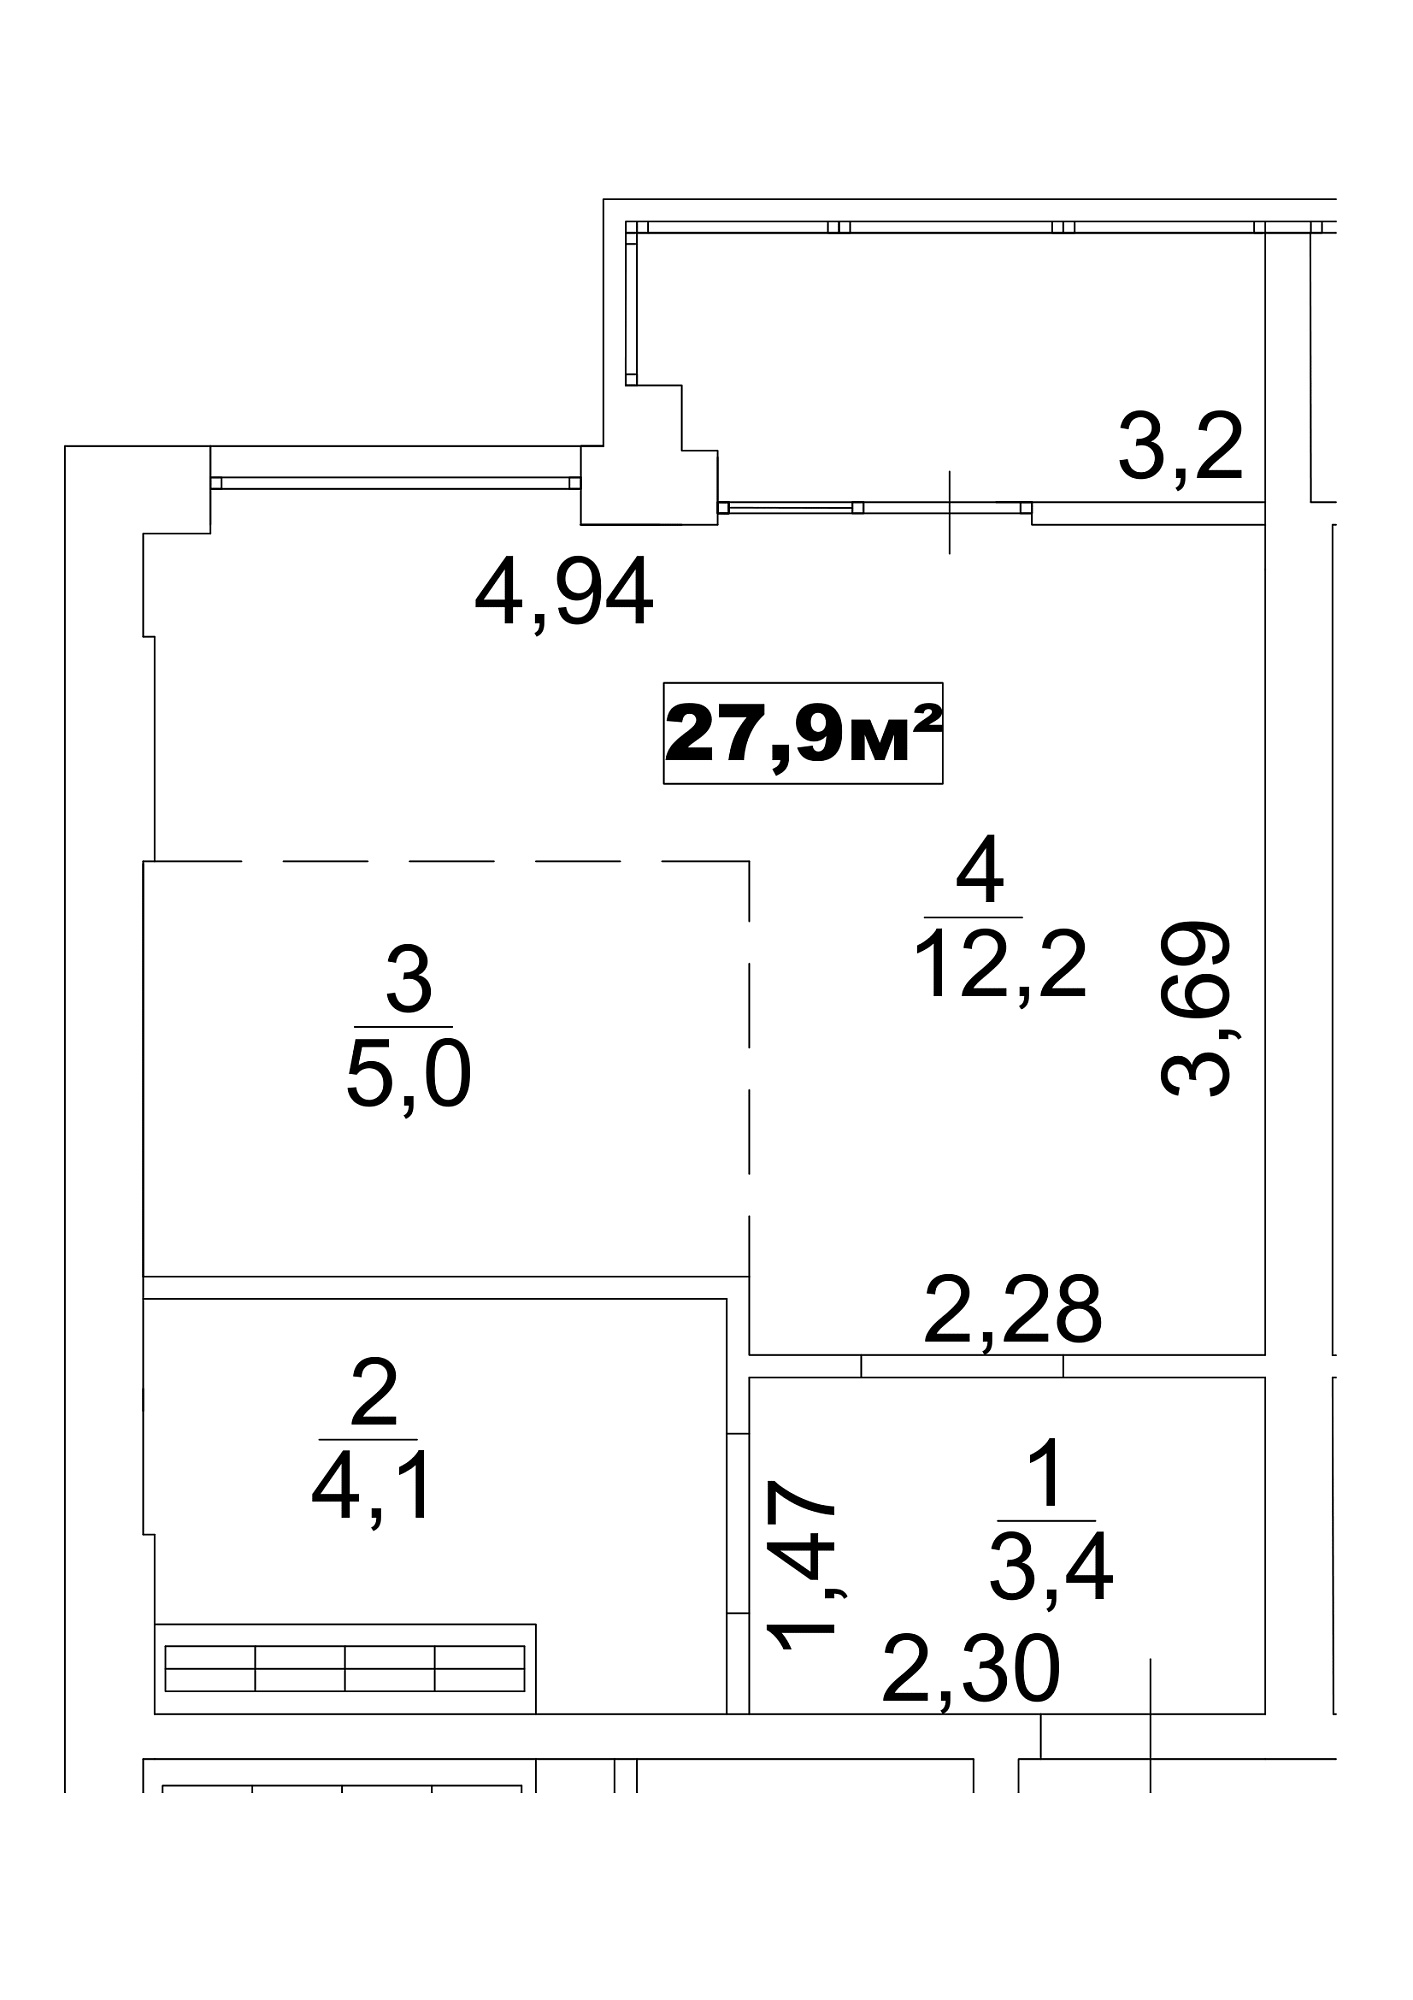 Planning Smart flats area 27.9m2, AB-13-02/0009б.